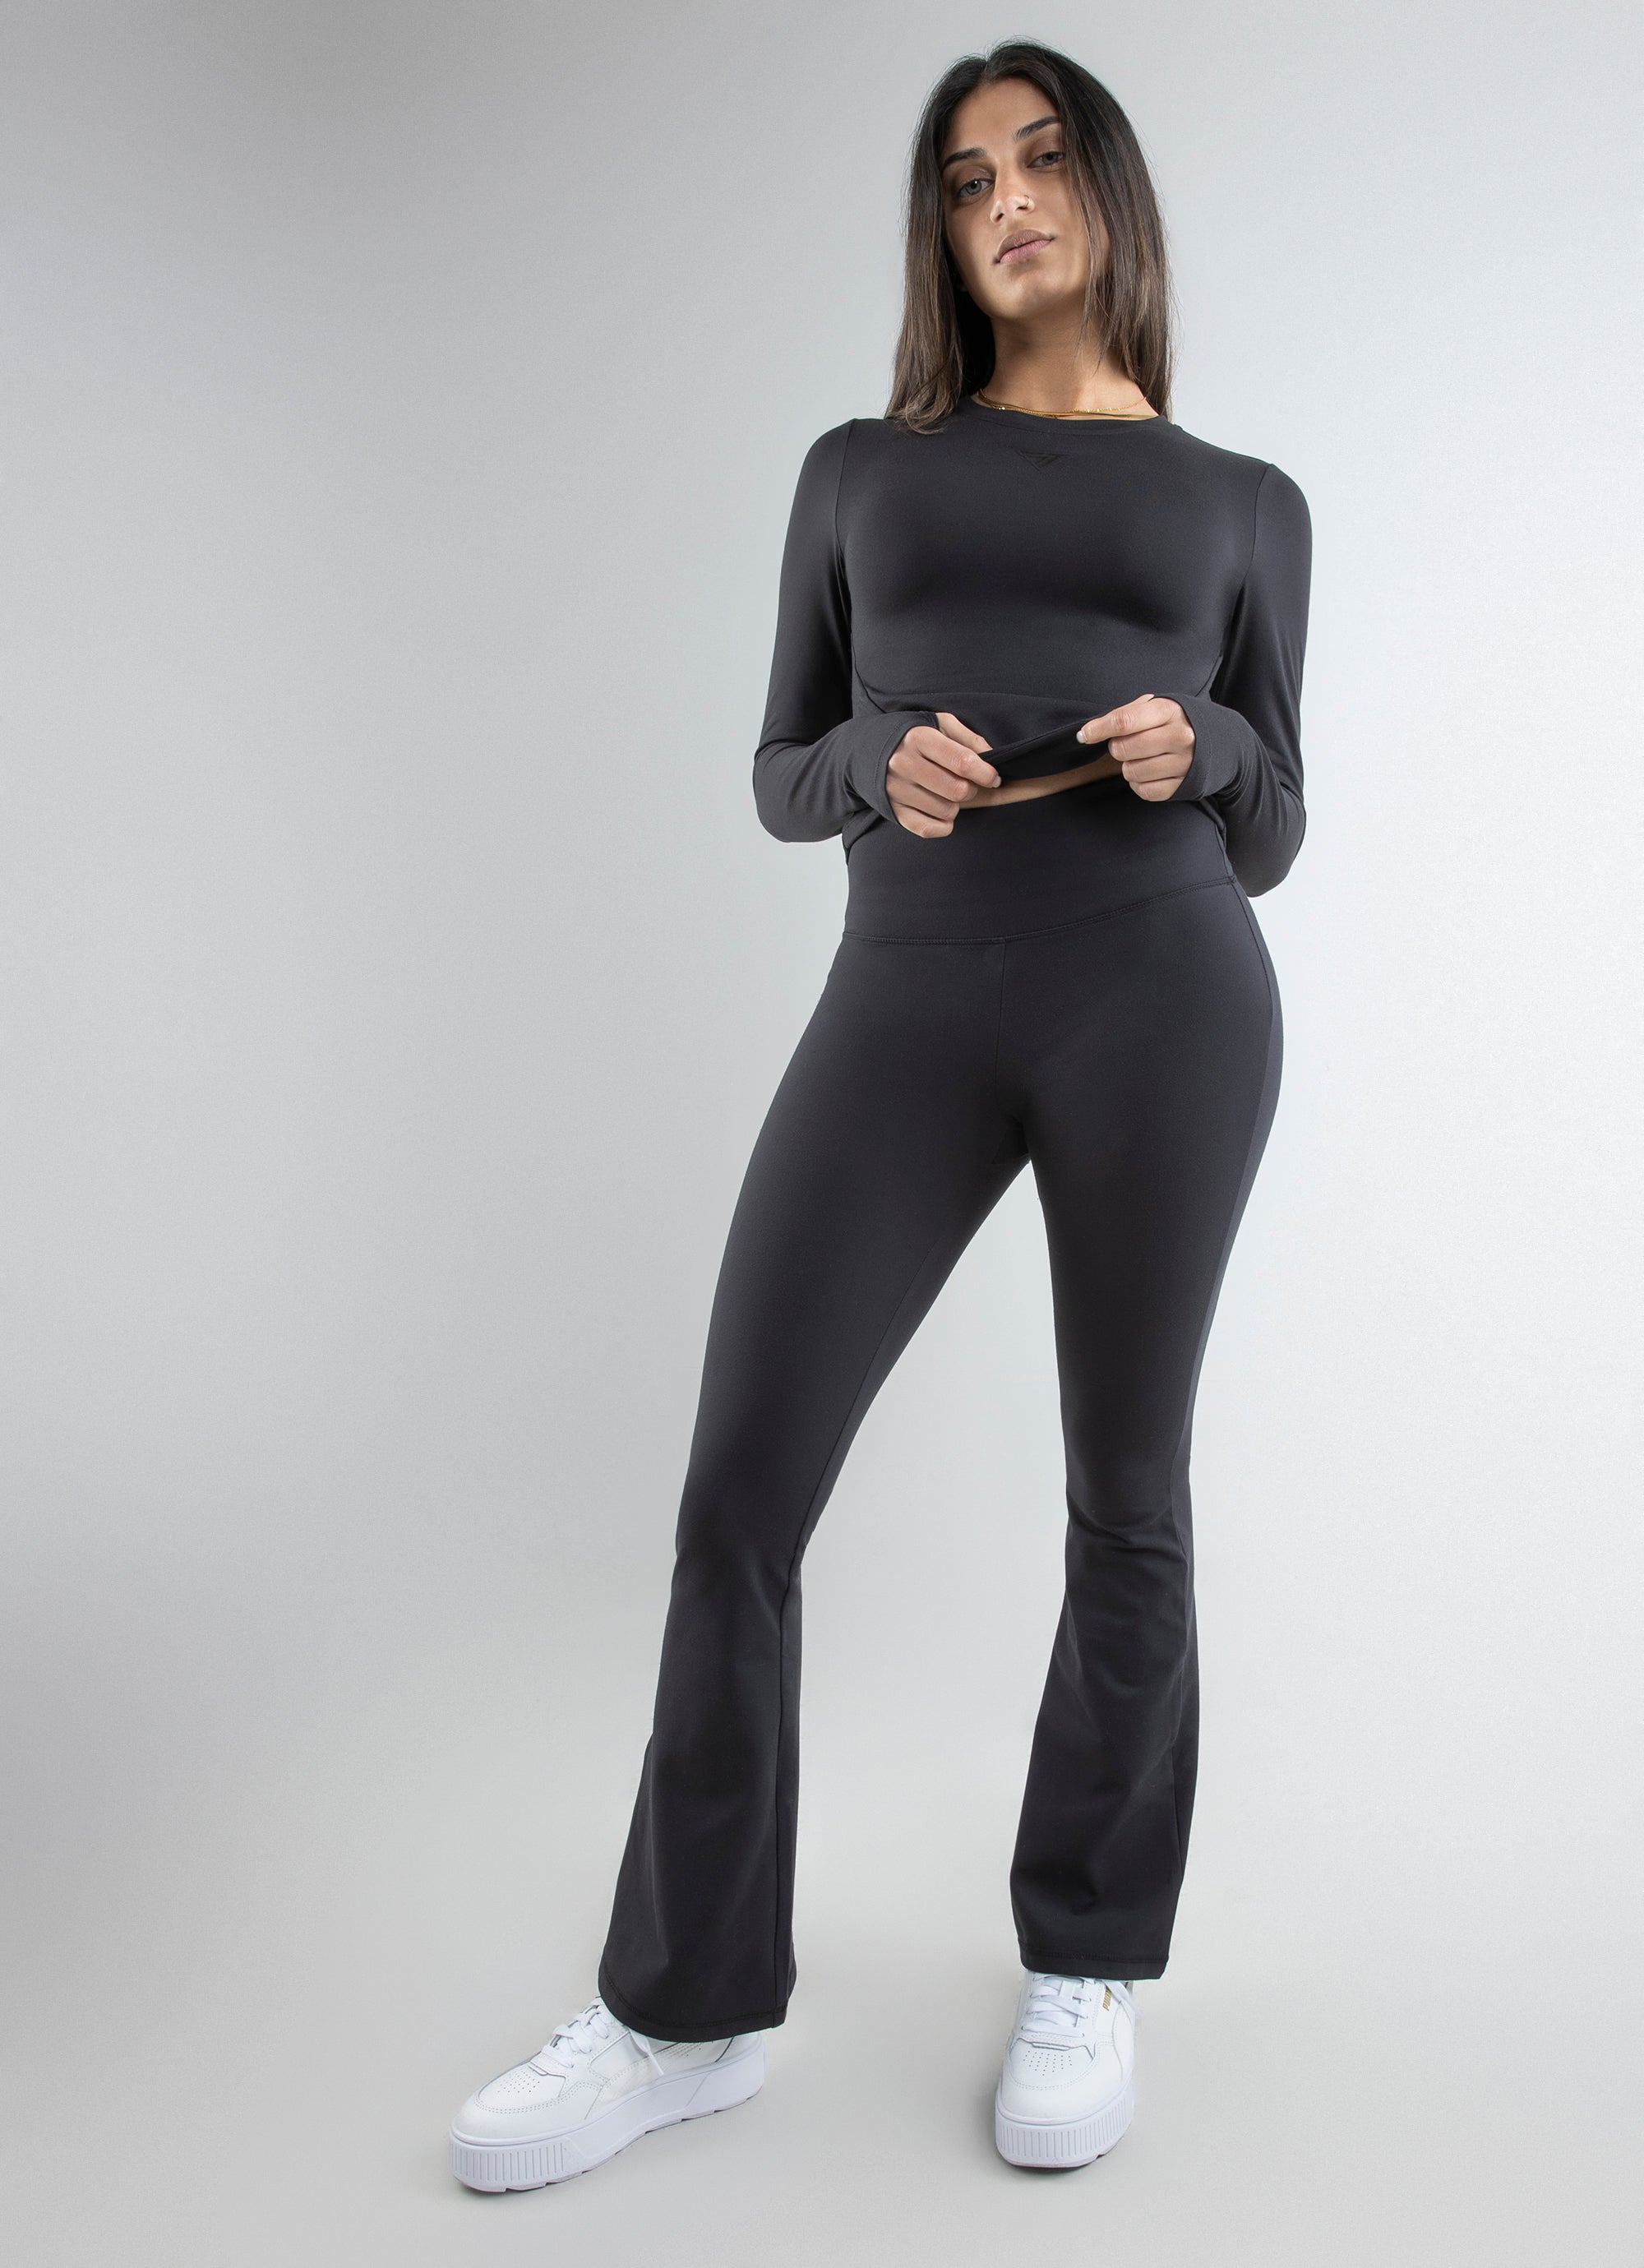 https://www.redrat.co.nz/content/products/stryde-cool-it-flared-leggings-black-front-54014.jpg